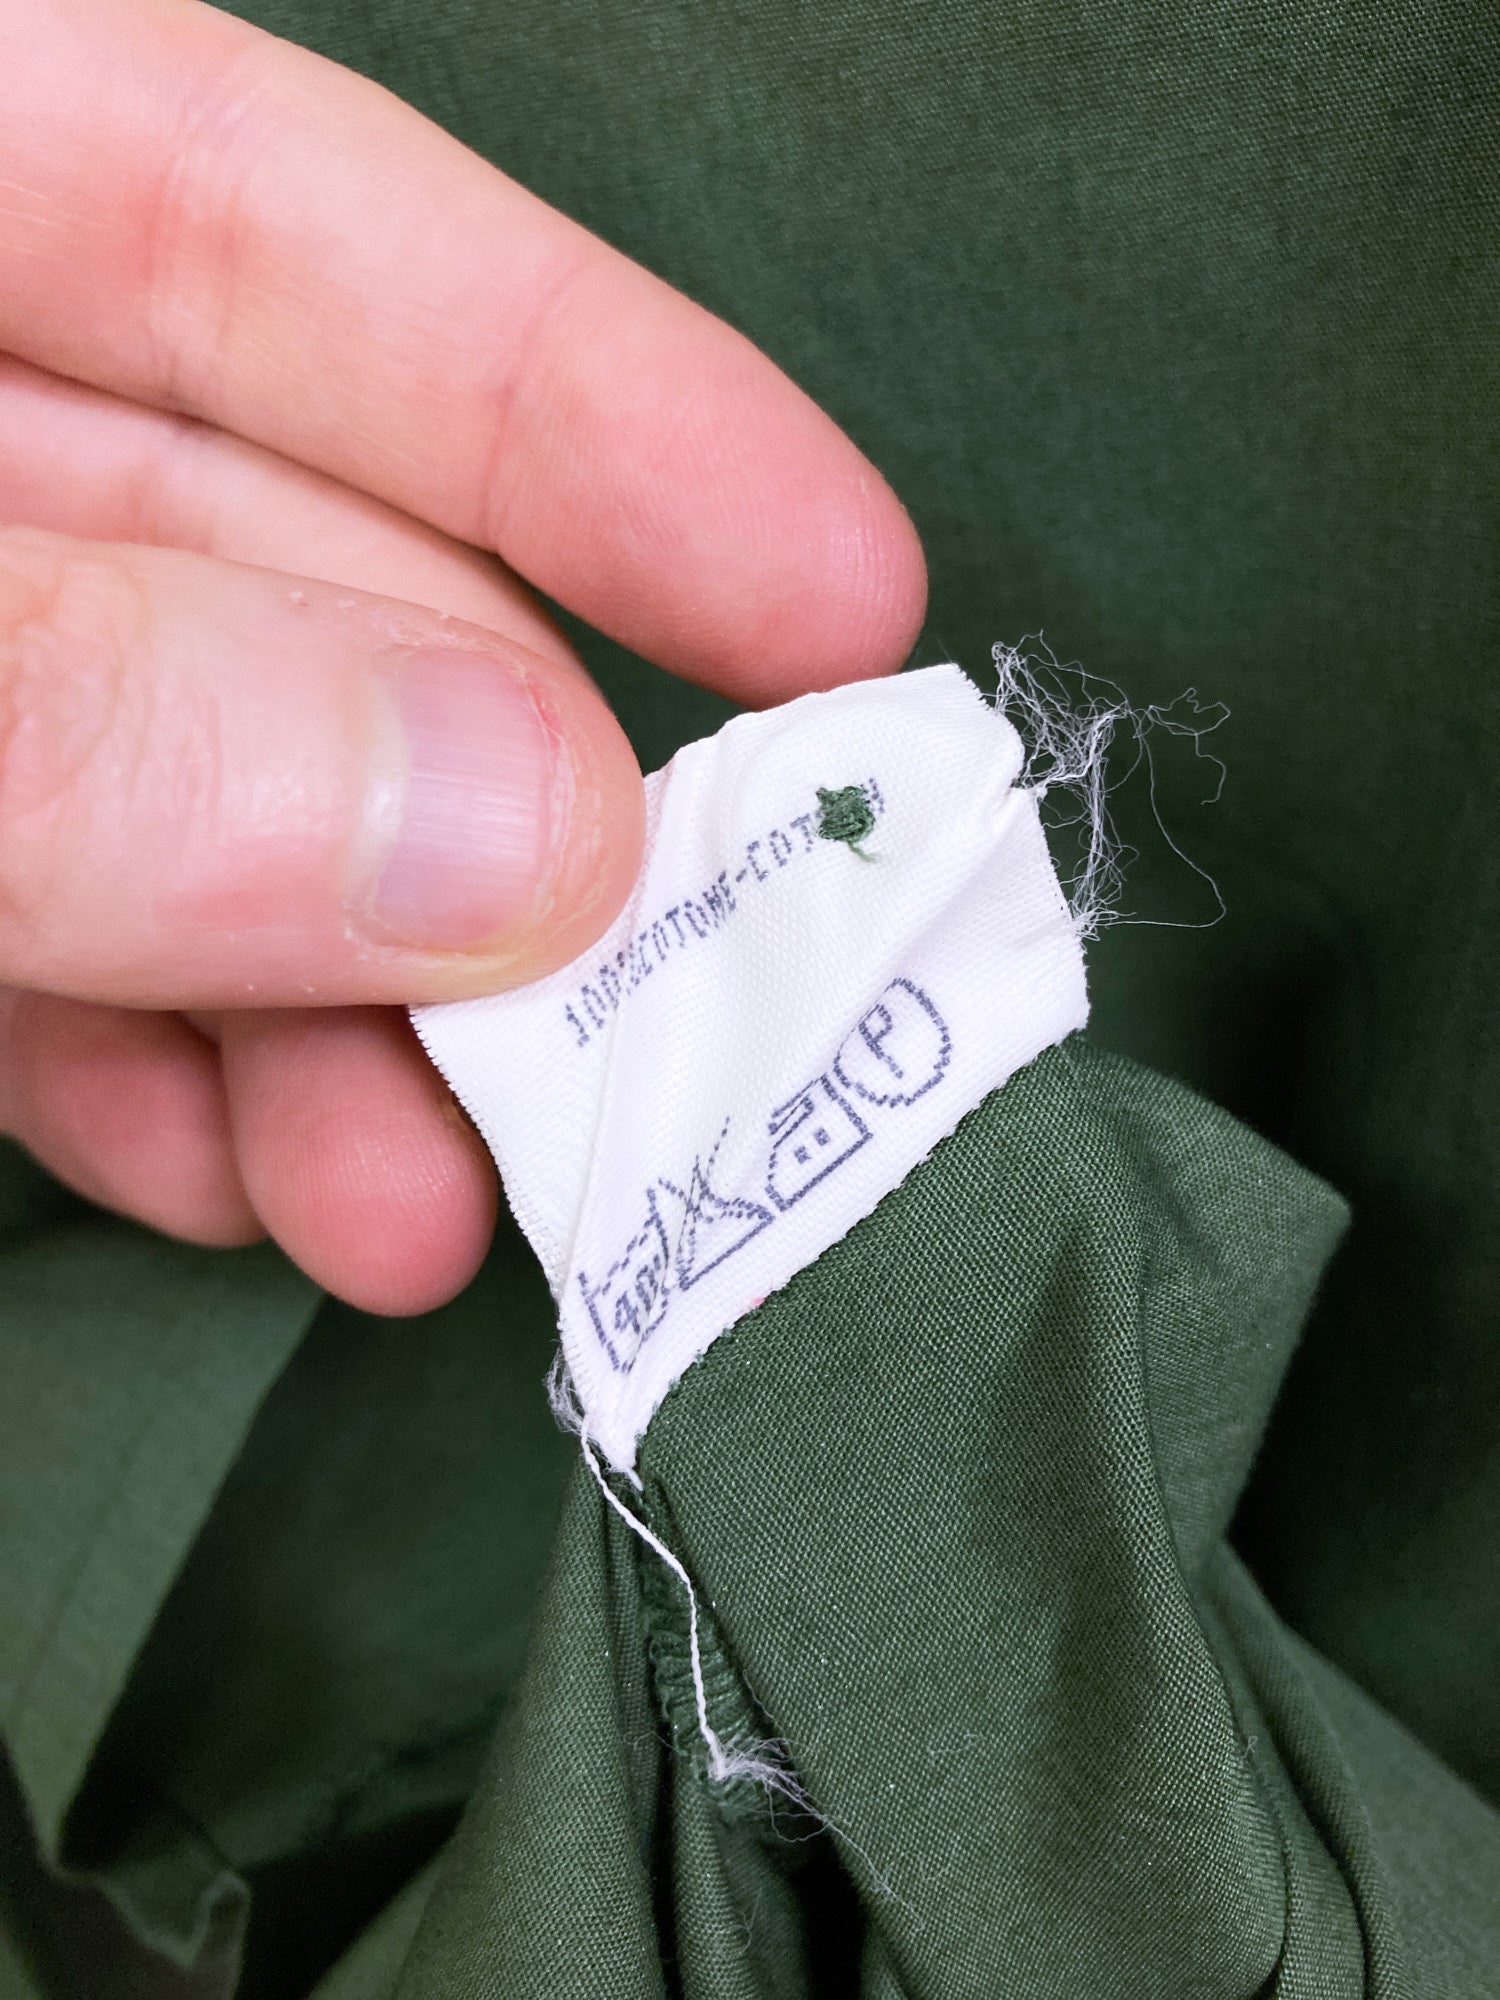 Jean Colonna khaki green cotton darted long sleeve shirt - size 48